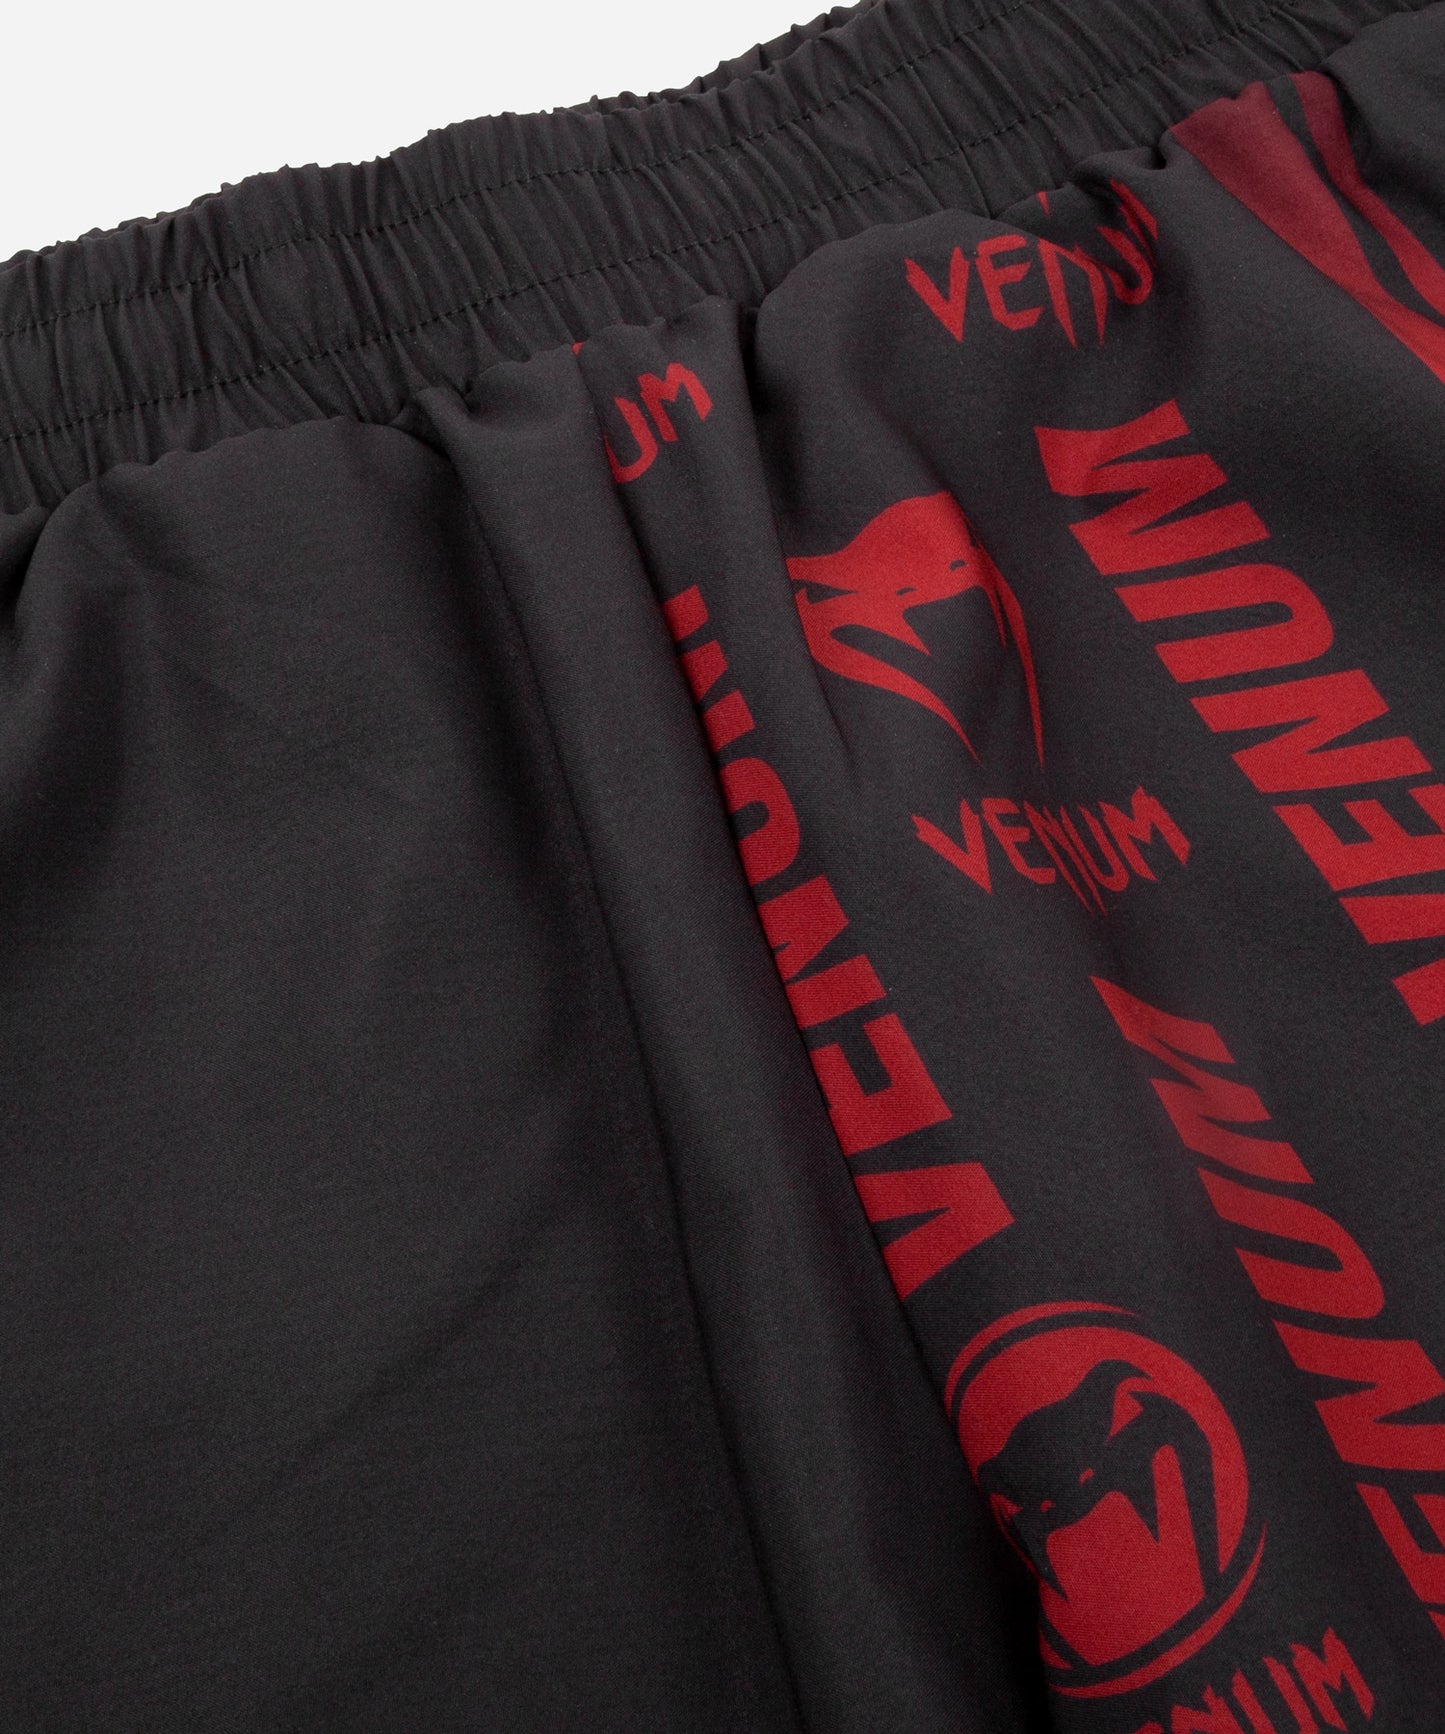 Fitness-Shorts Venum Logos - Schwarz/Rot